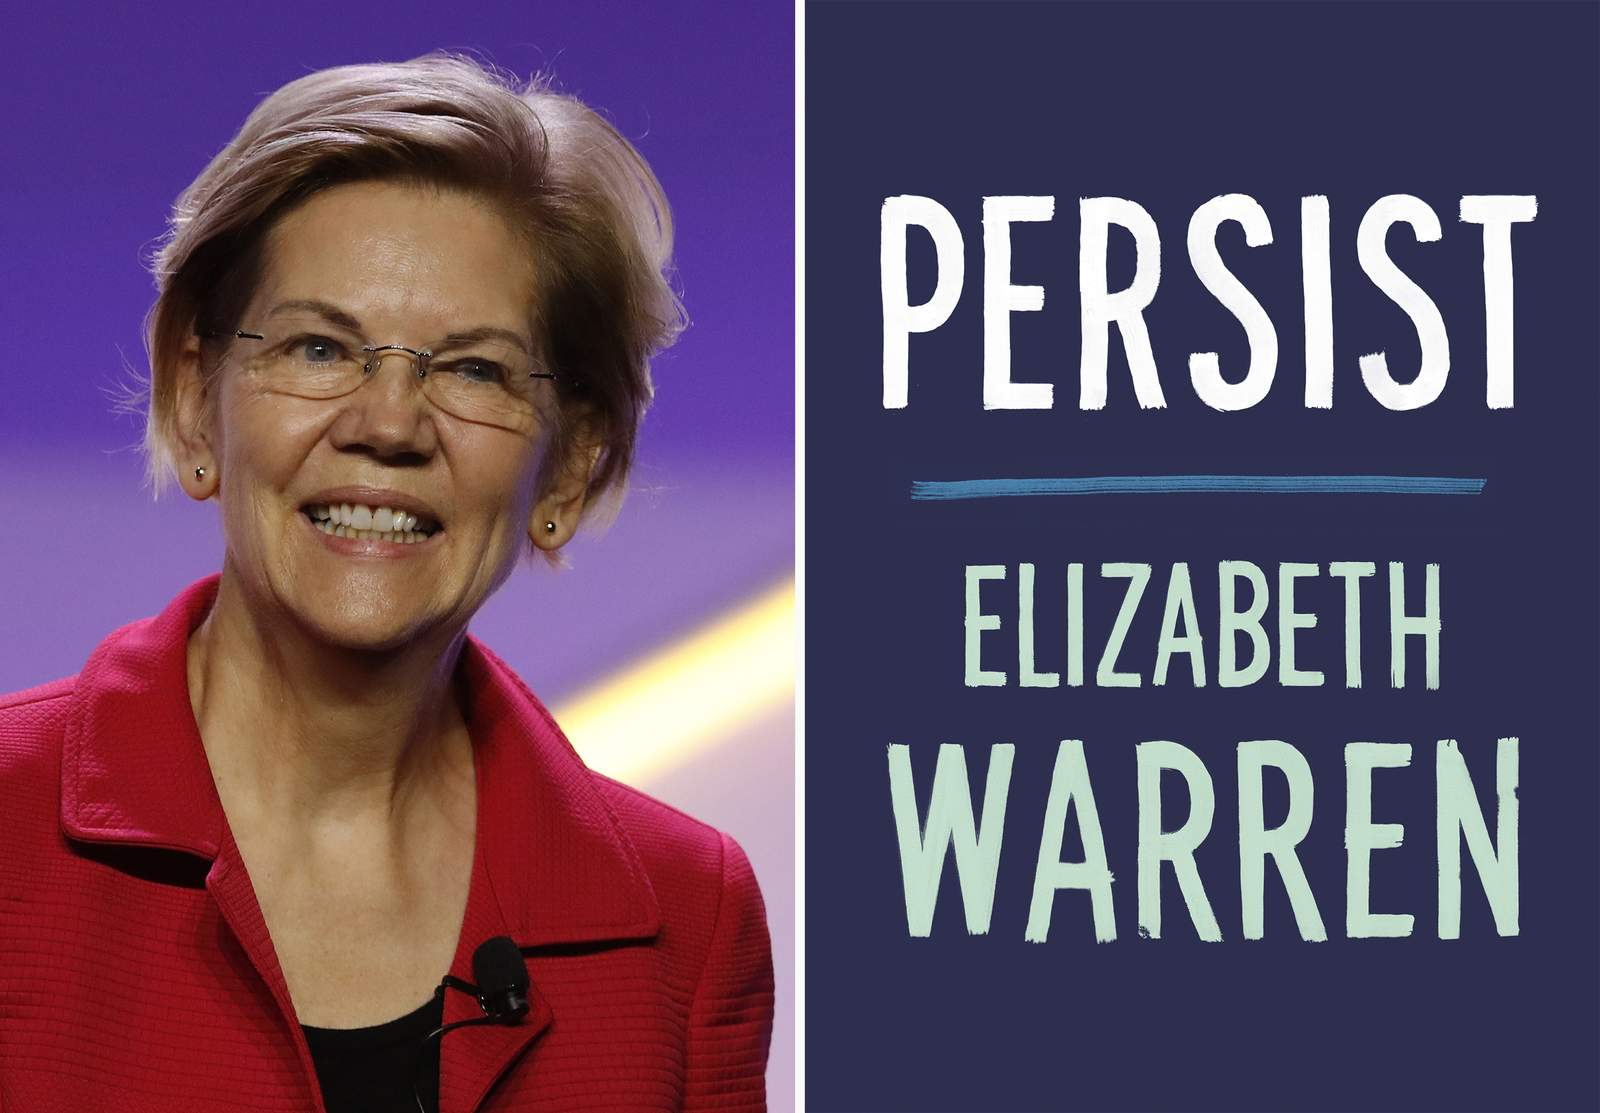 Sen. Elizabeth Warren’s book ‘Persist’ to come out in April